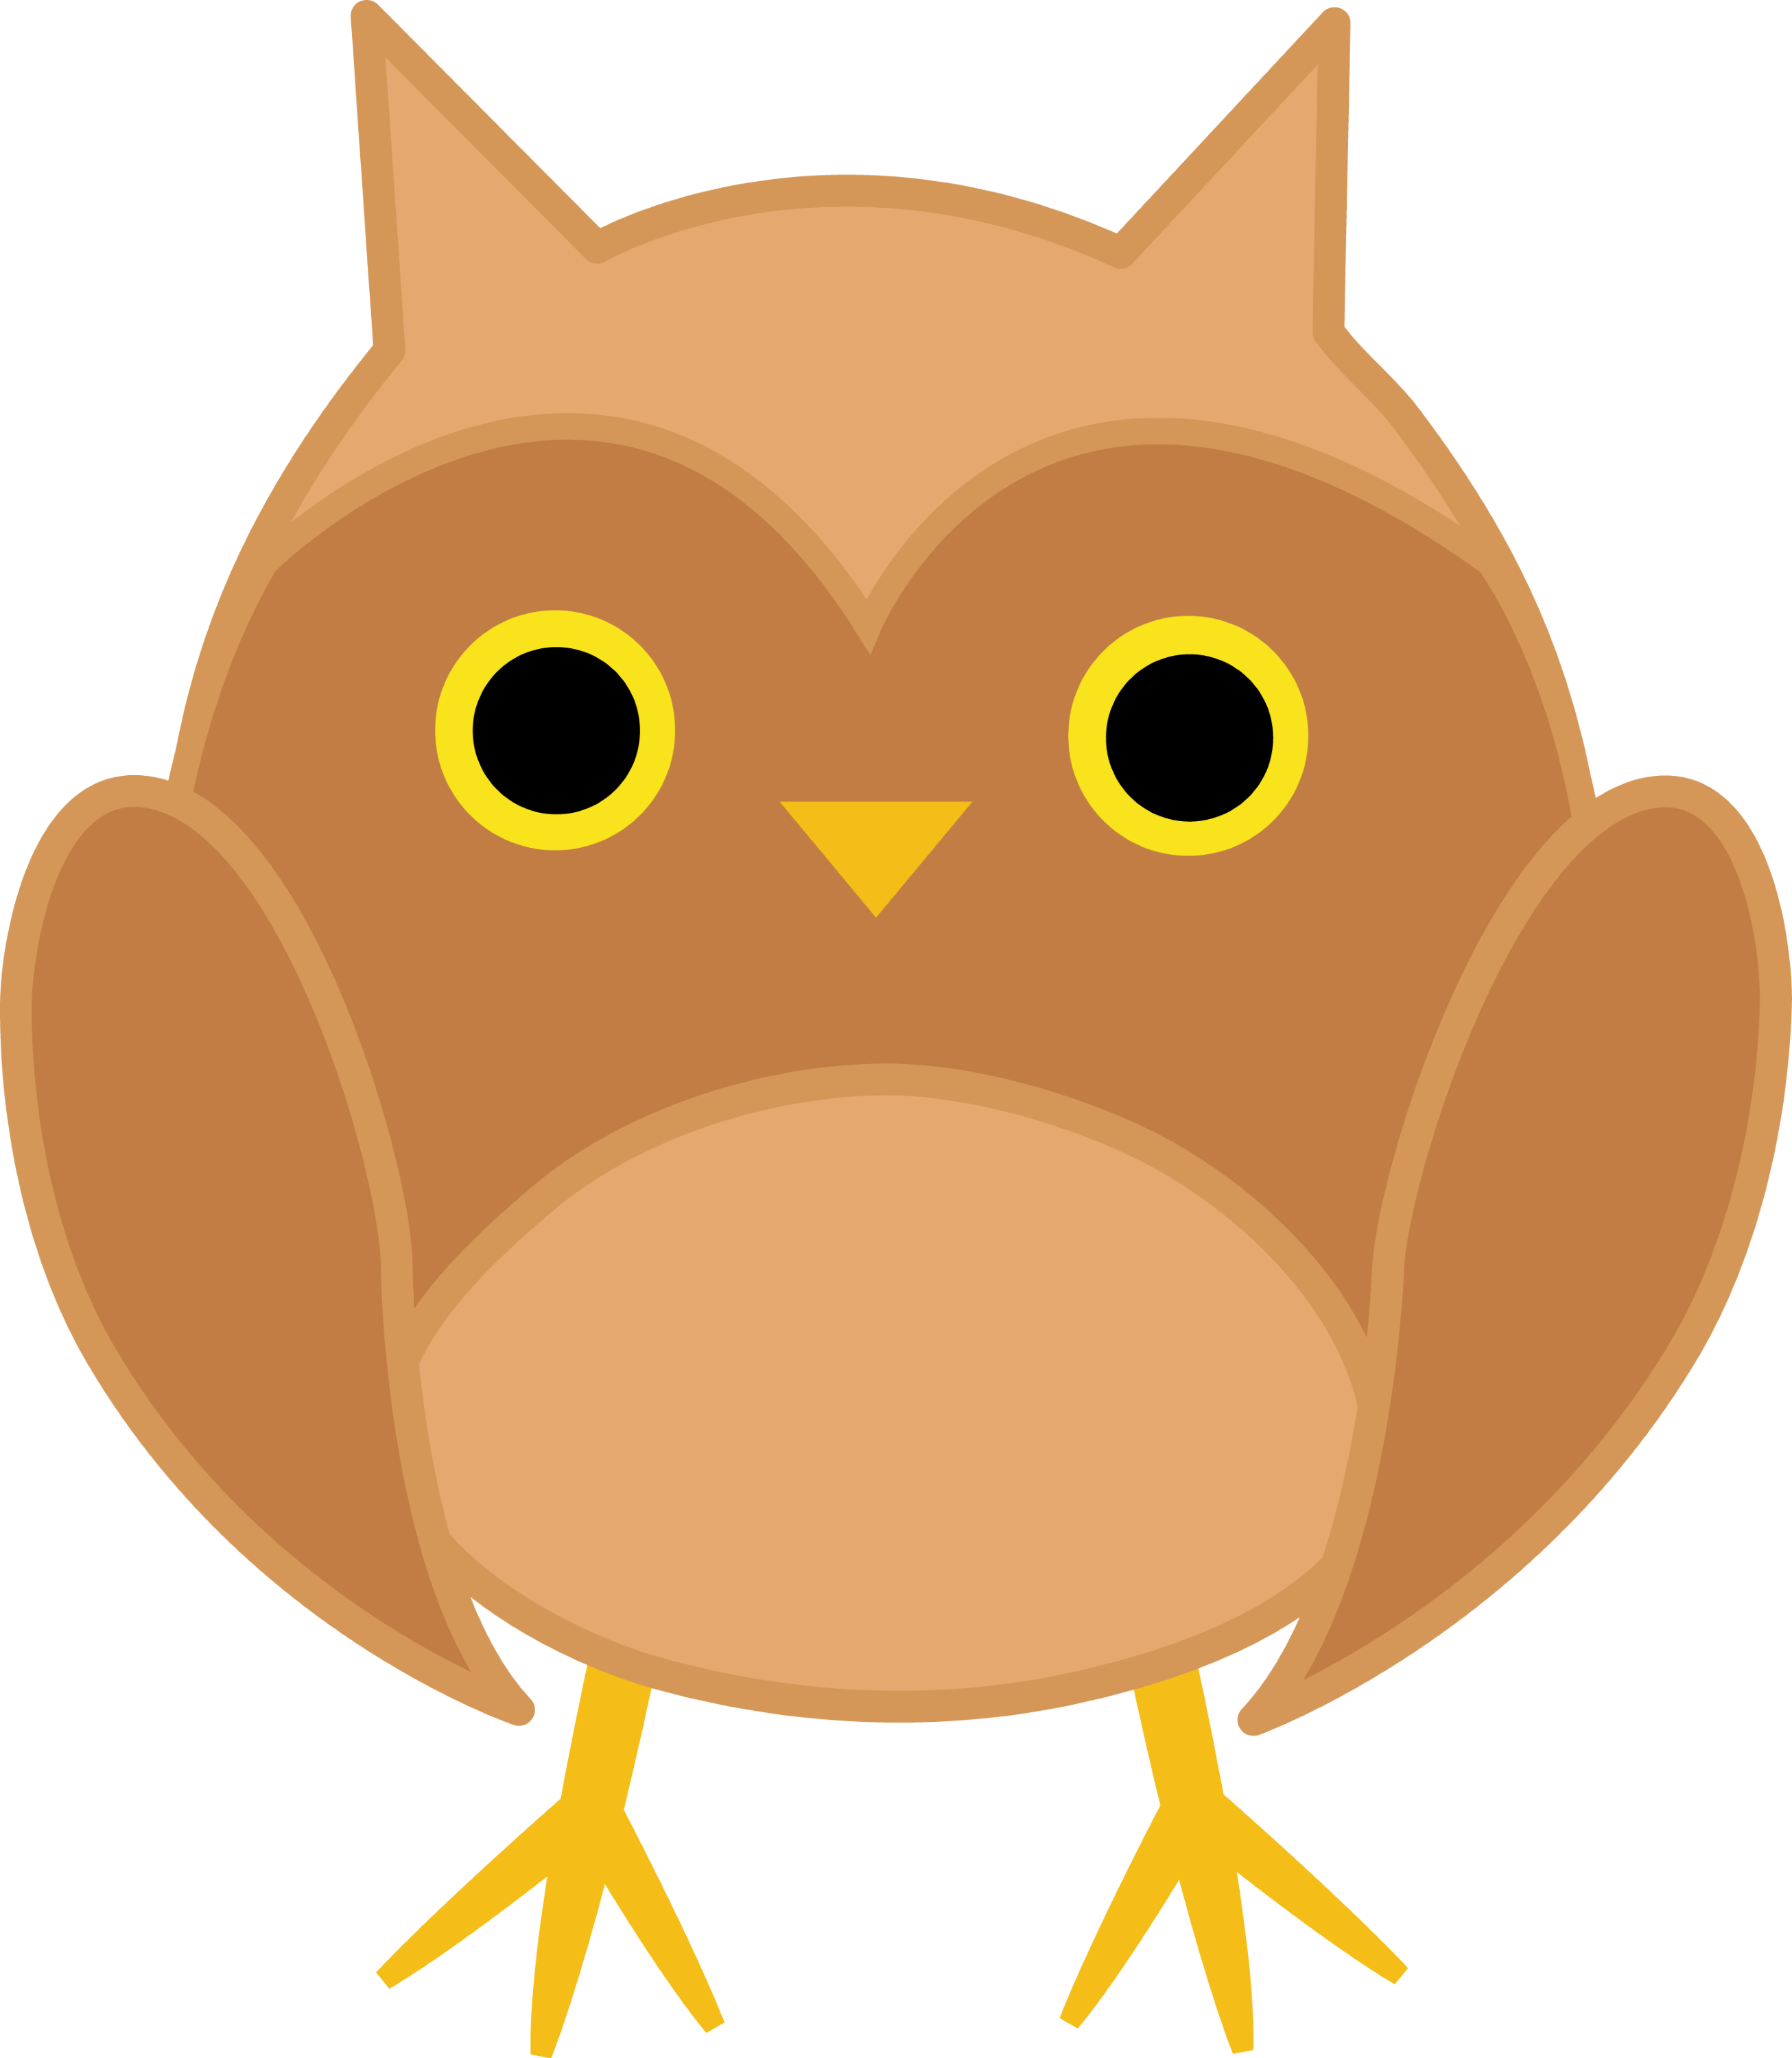 free clipart owl - photo #19